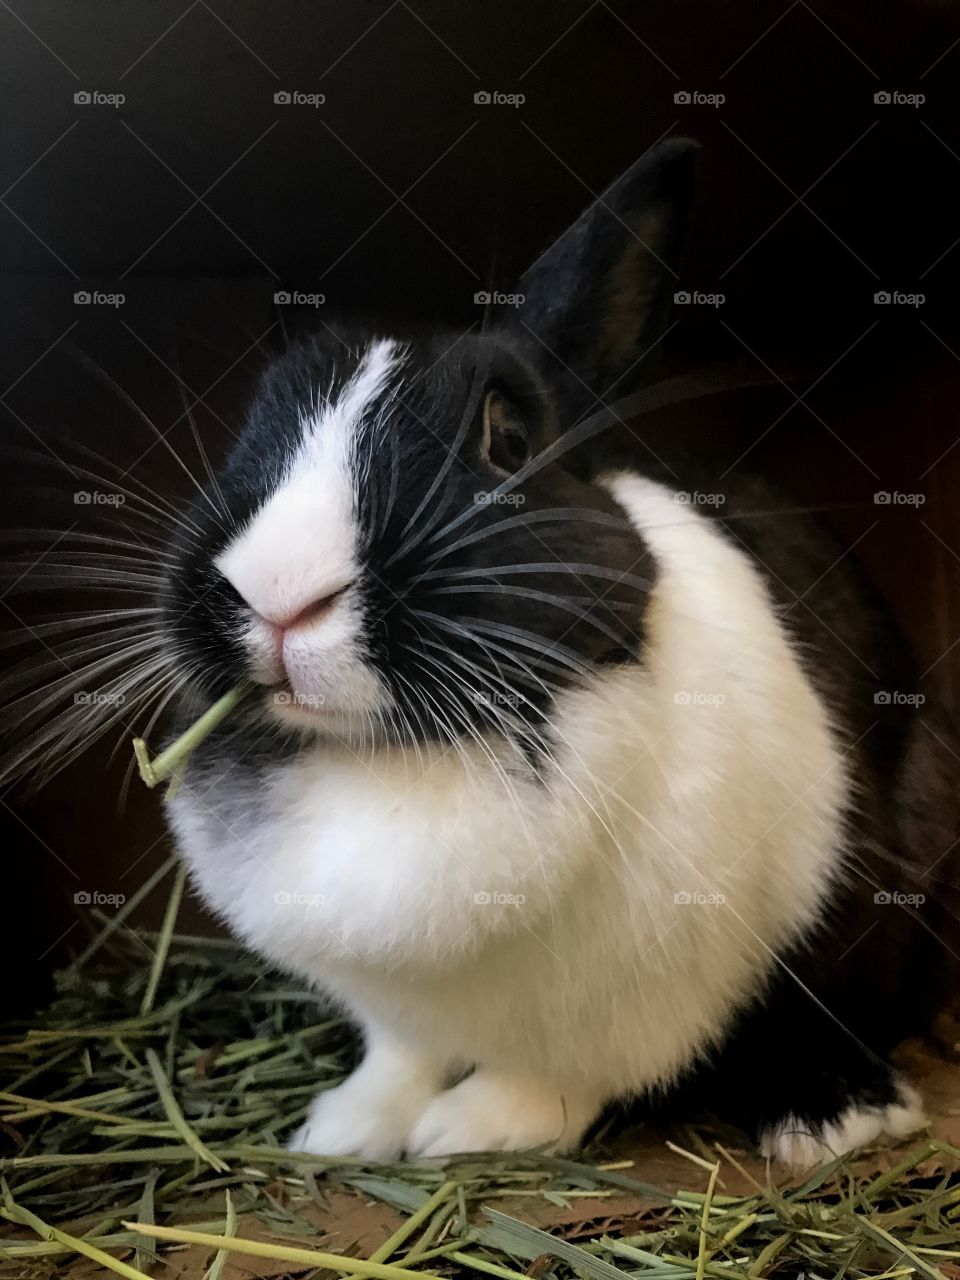 Rabbit eating Timothy hay